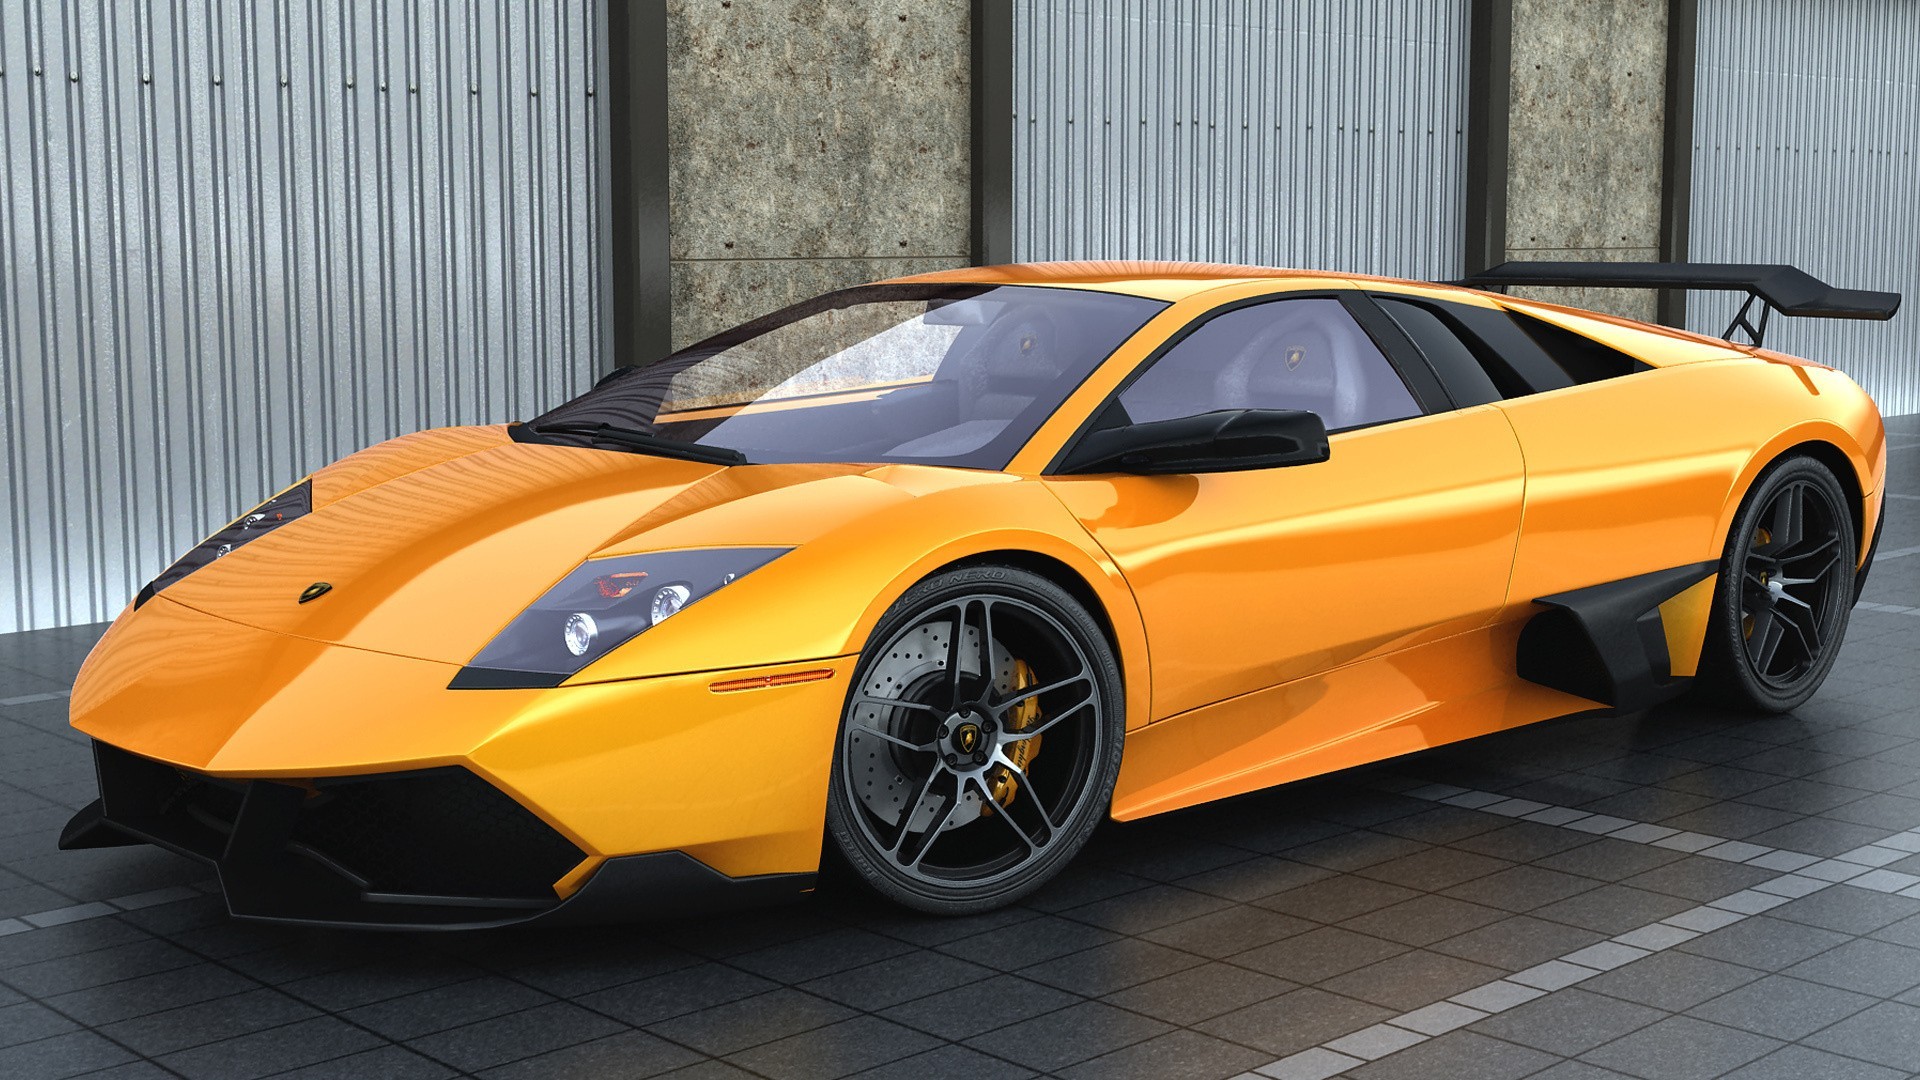 Lamborghini Murcielago Wallpapers Hd Desktop And Mobile Backgrounds